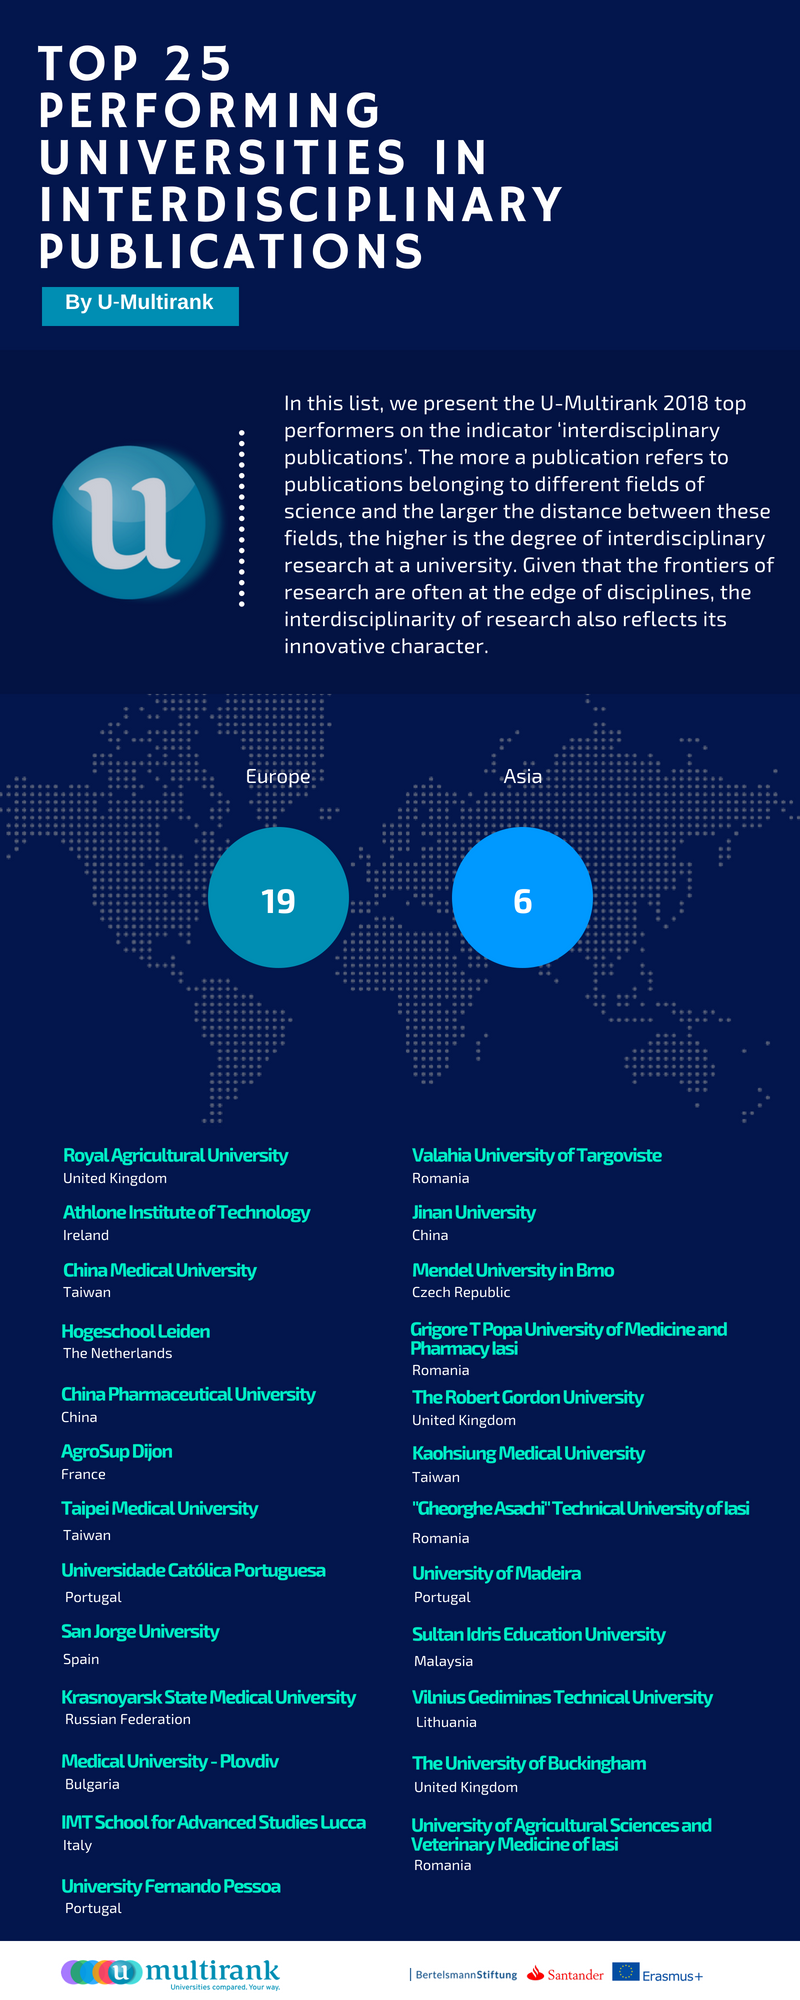 Top 25 Universities in Interdisciplinary Publications